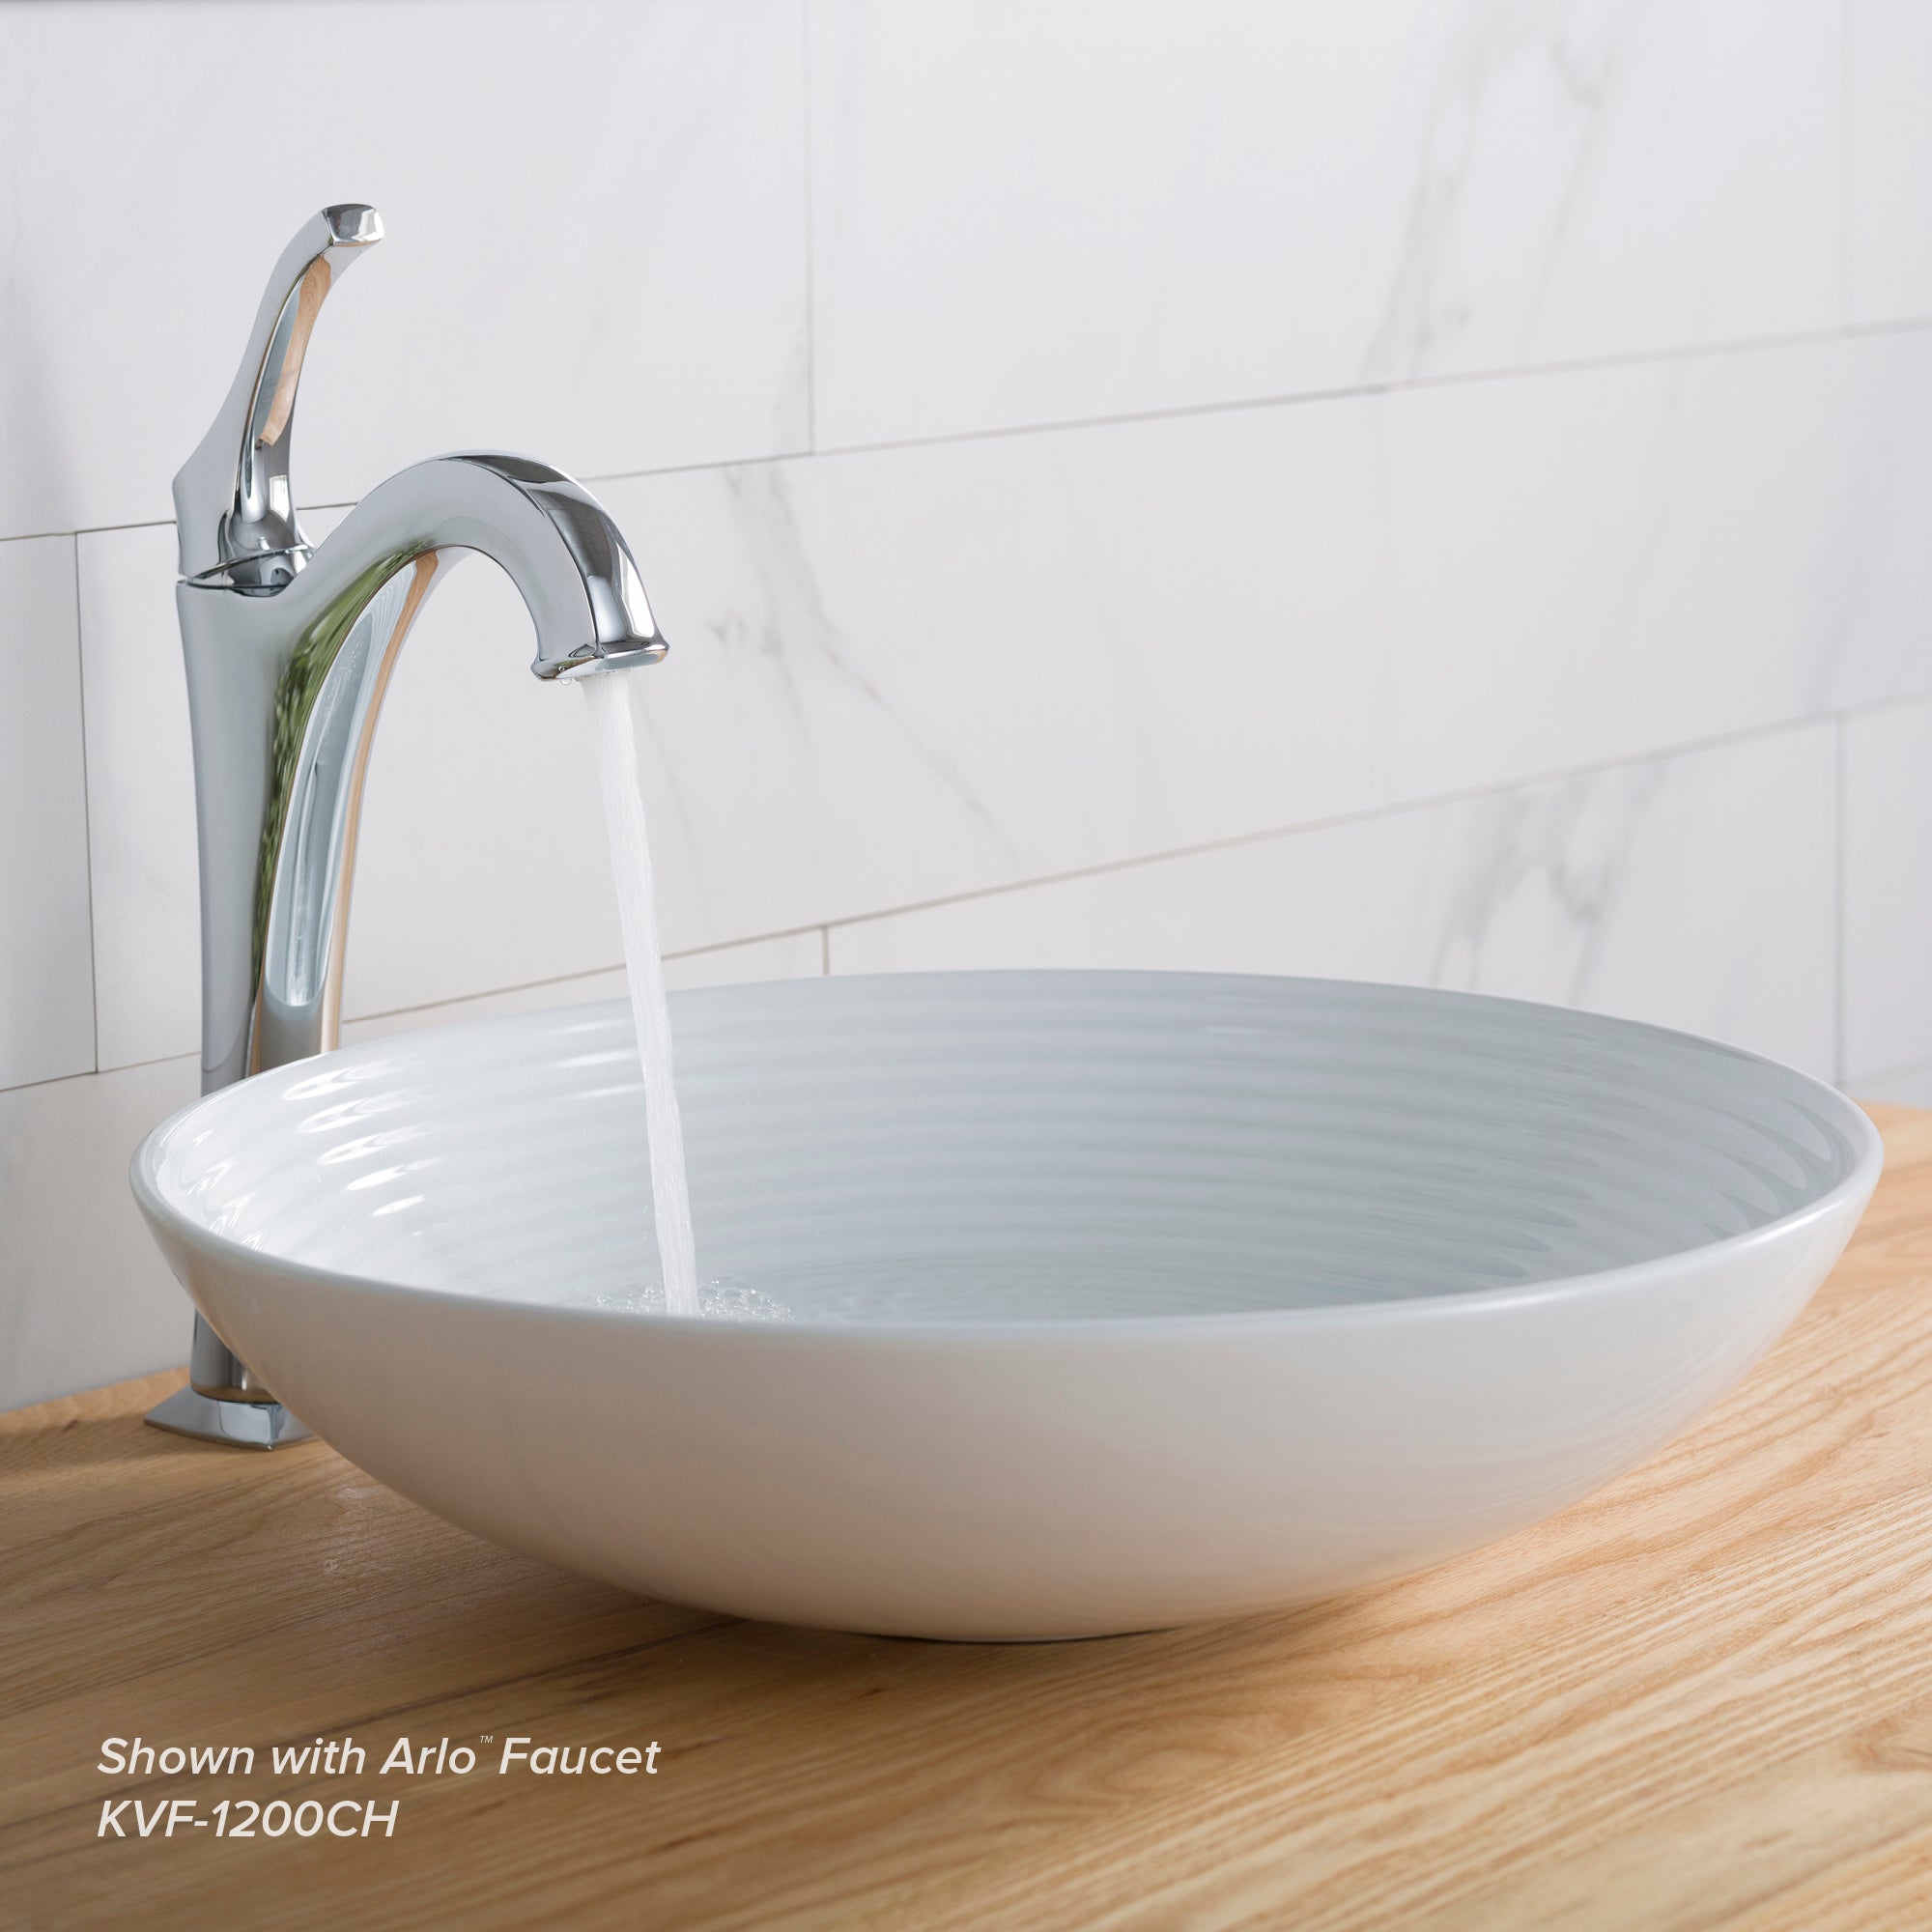 KRAUS Viva 16.5 Inch Round White Porcelain Ceramic Vessel Bathroom Sink-Bathroom Sinks-DirectSinks